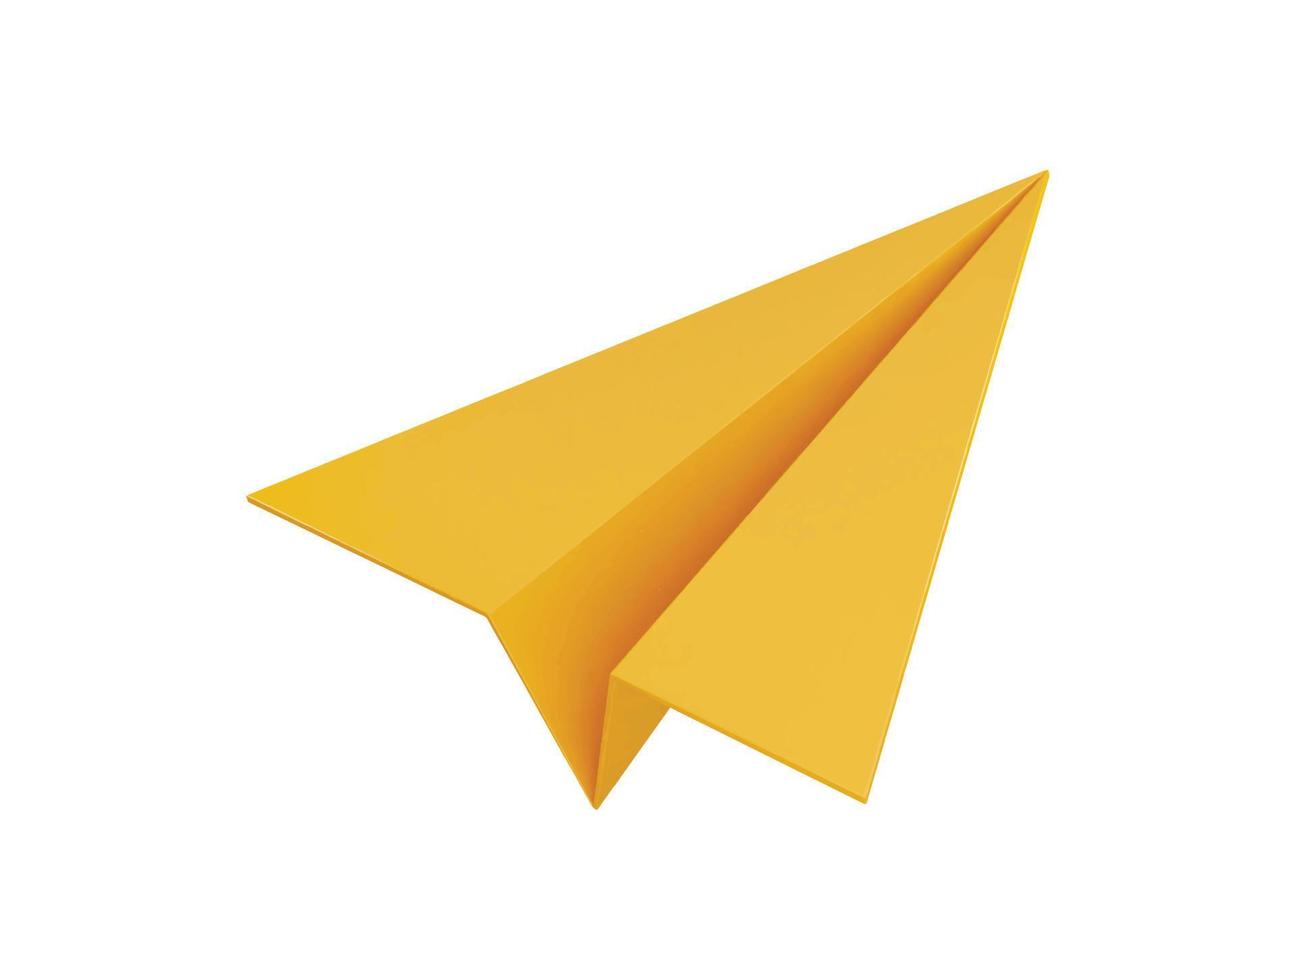 paper plane icon 3d rendering vector illustration